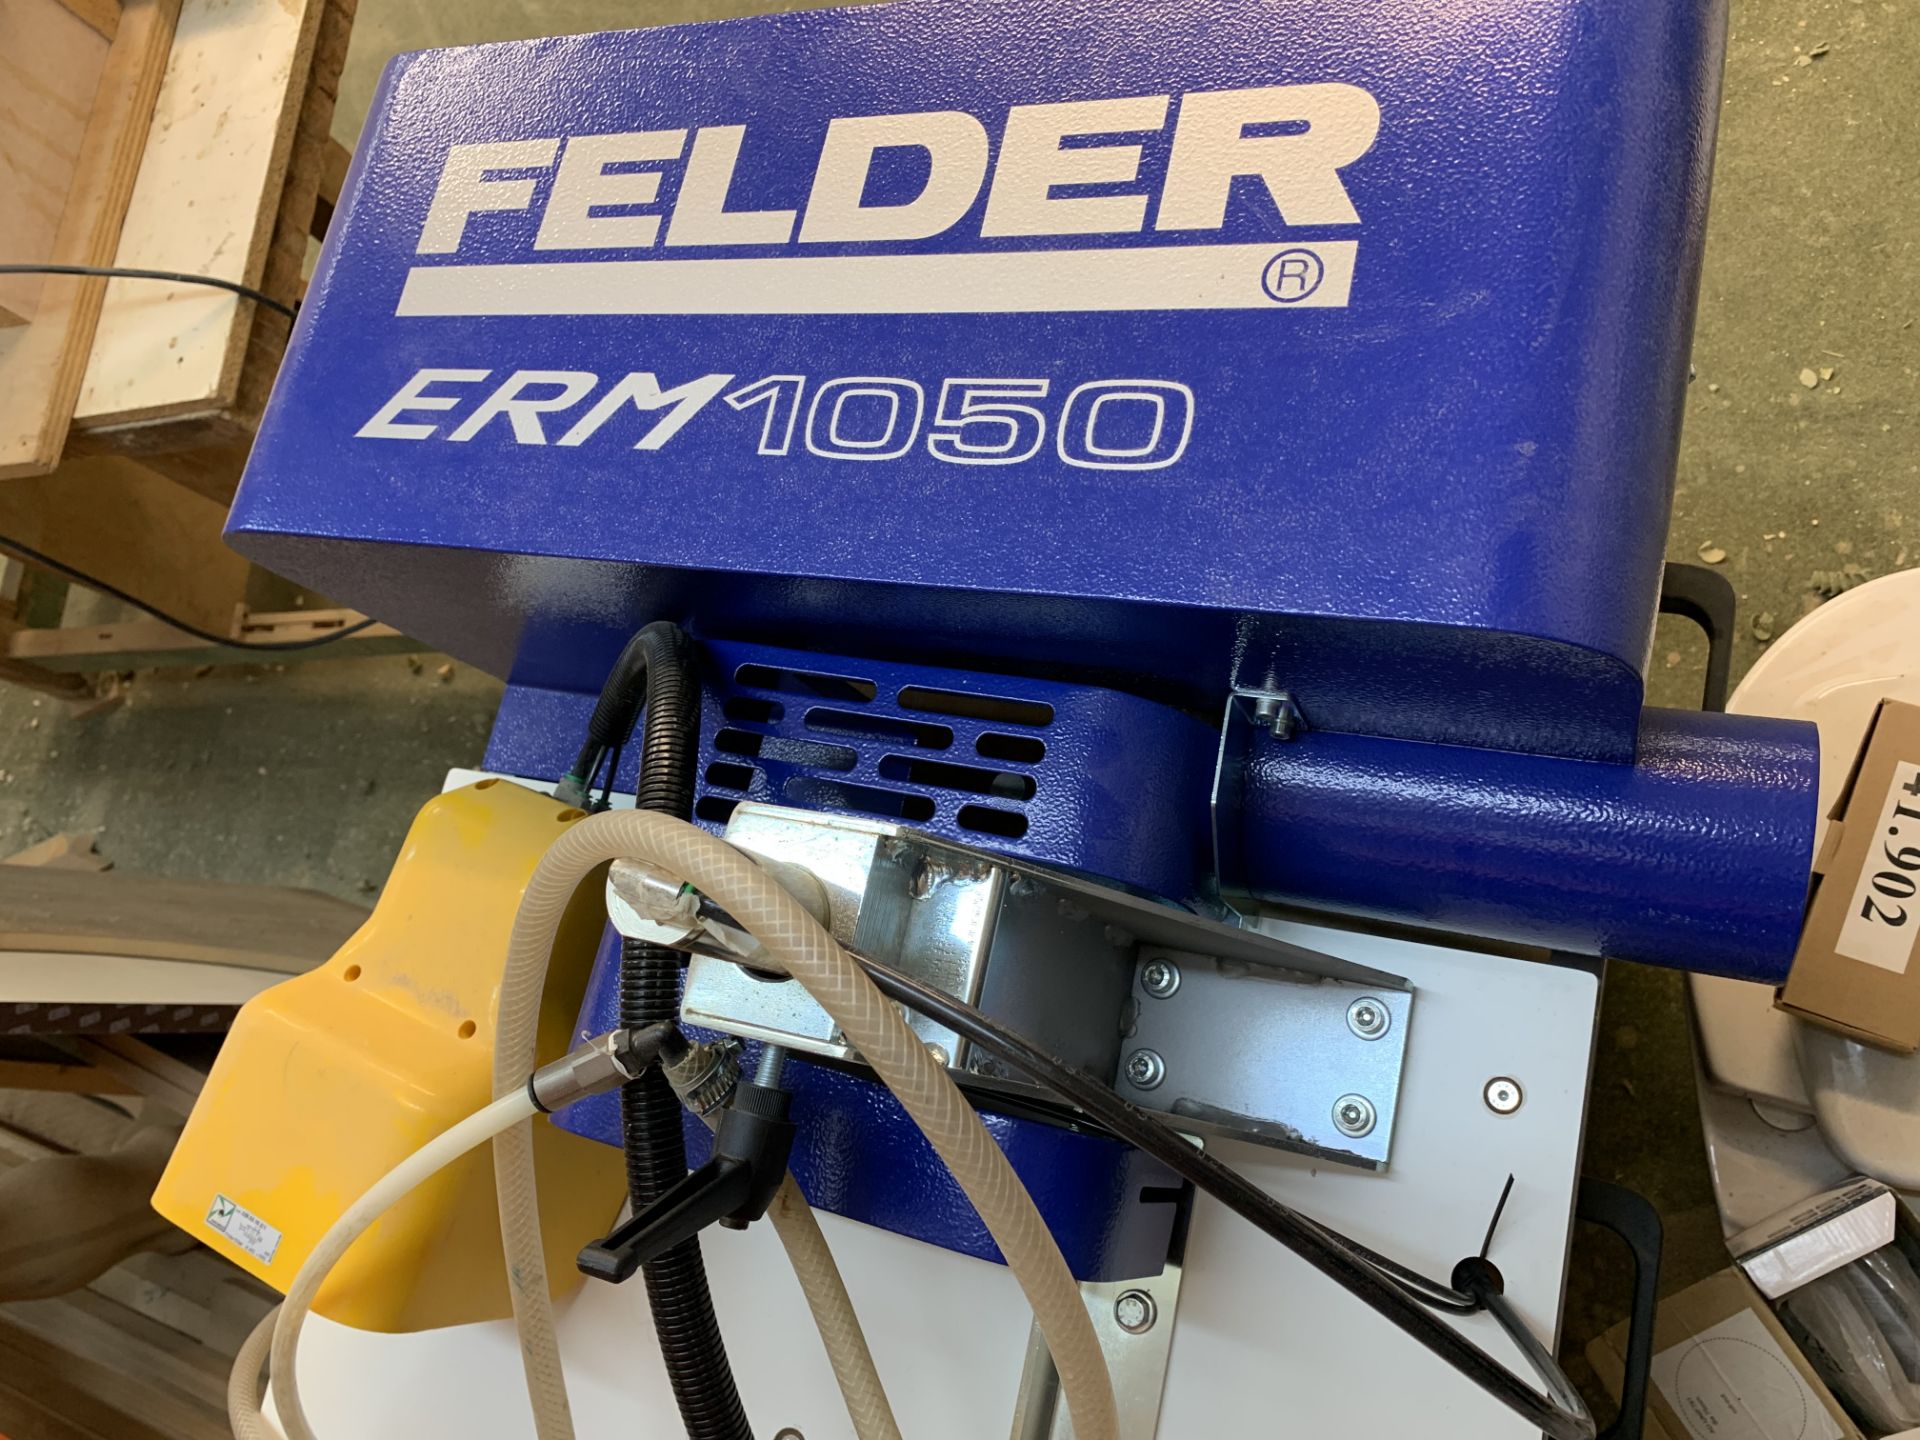 (2016) Felder type ERM 1050 Counter Top Corner Rounding Machine (s/n 16.304.026) - Image 2 of 3